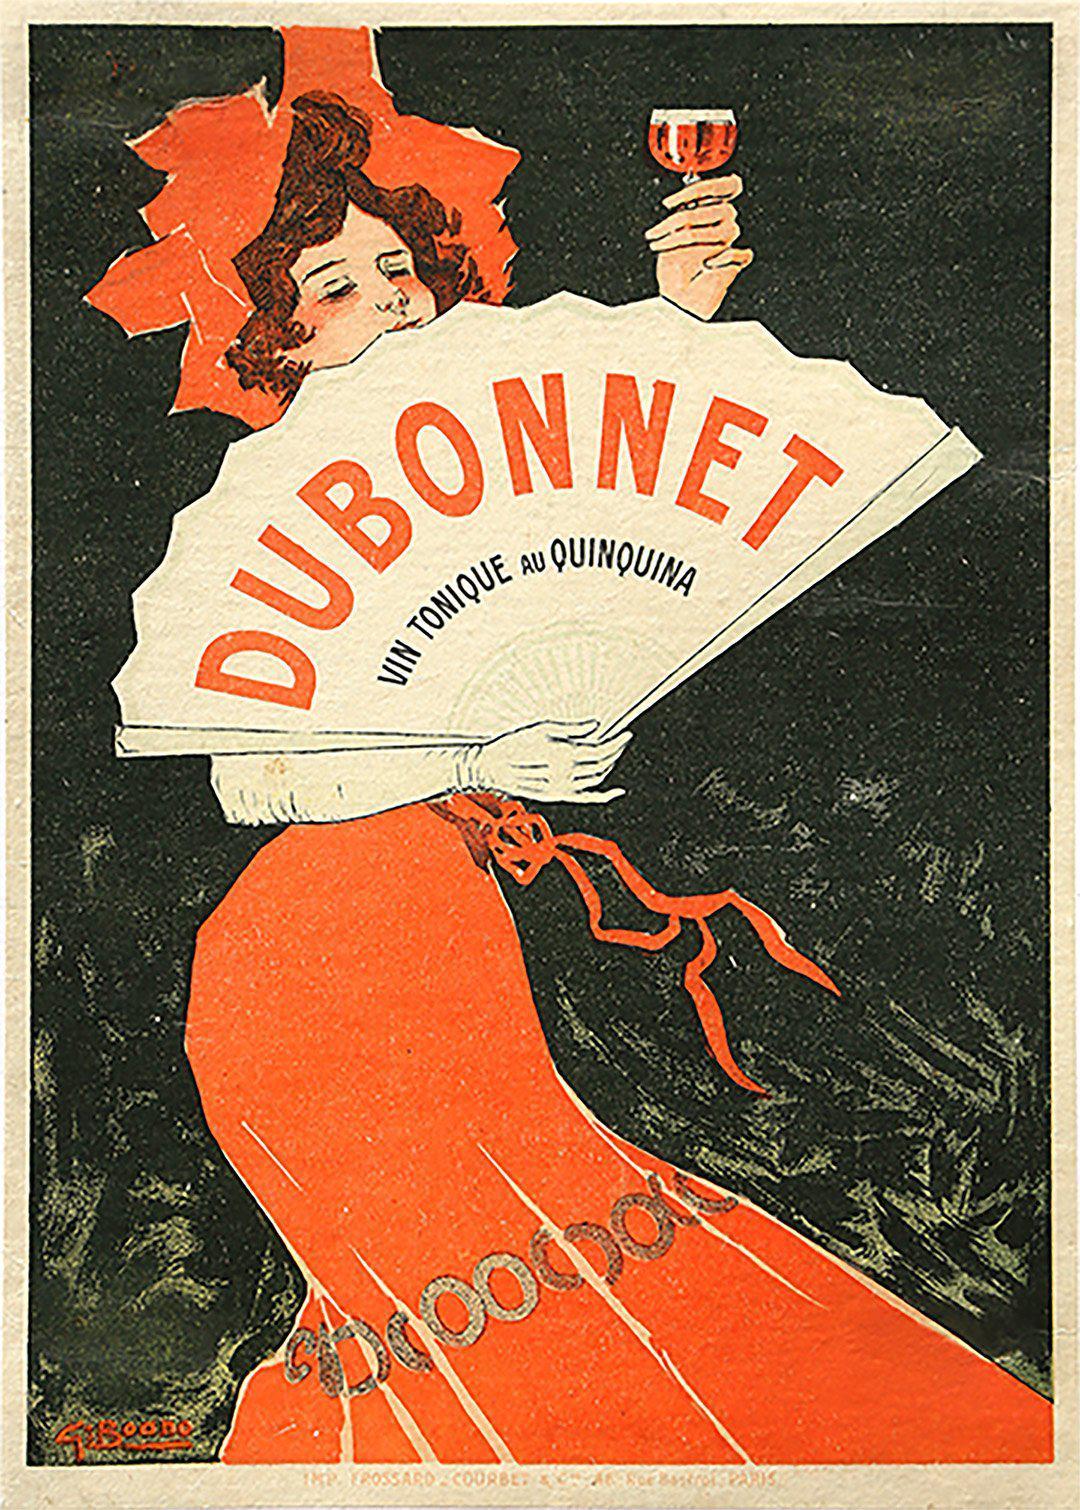 Original Dubonnet Aperitif Belle Epoque Poster by Boano c1890